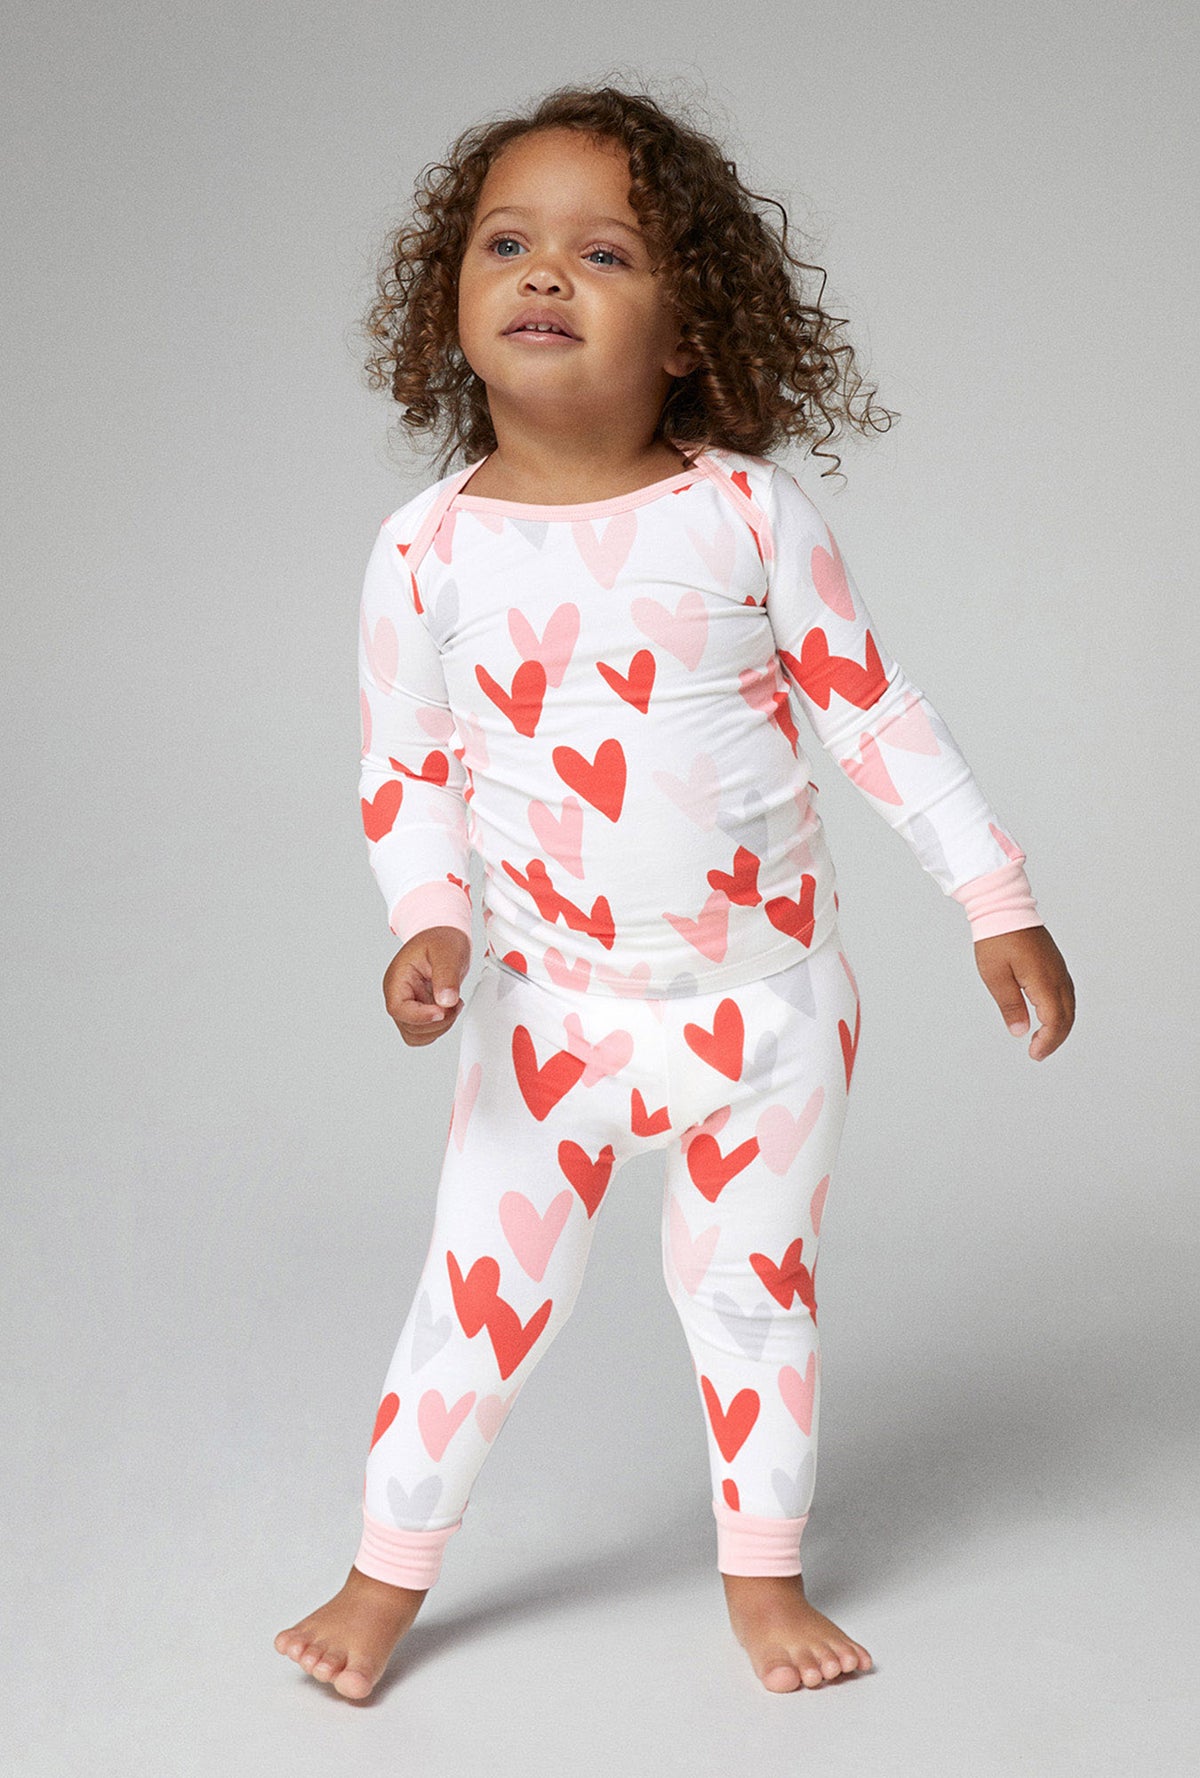 A toddler wearing long sleeve stretch jersey pj set